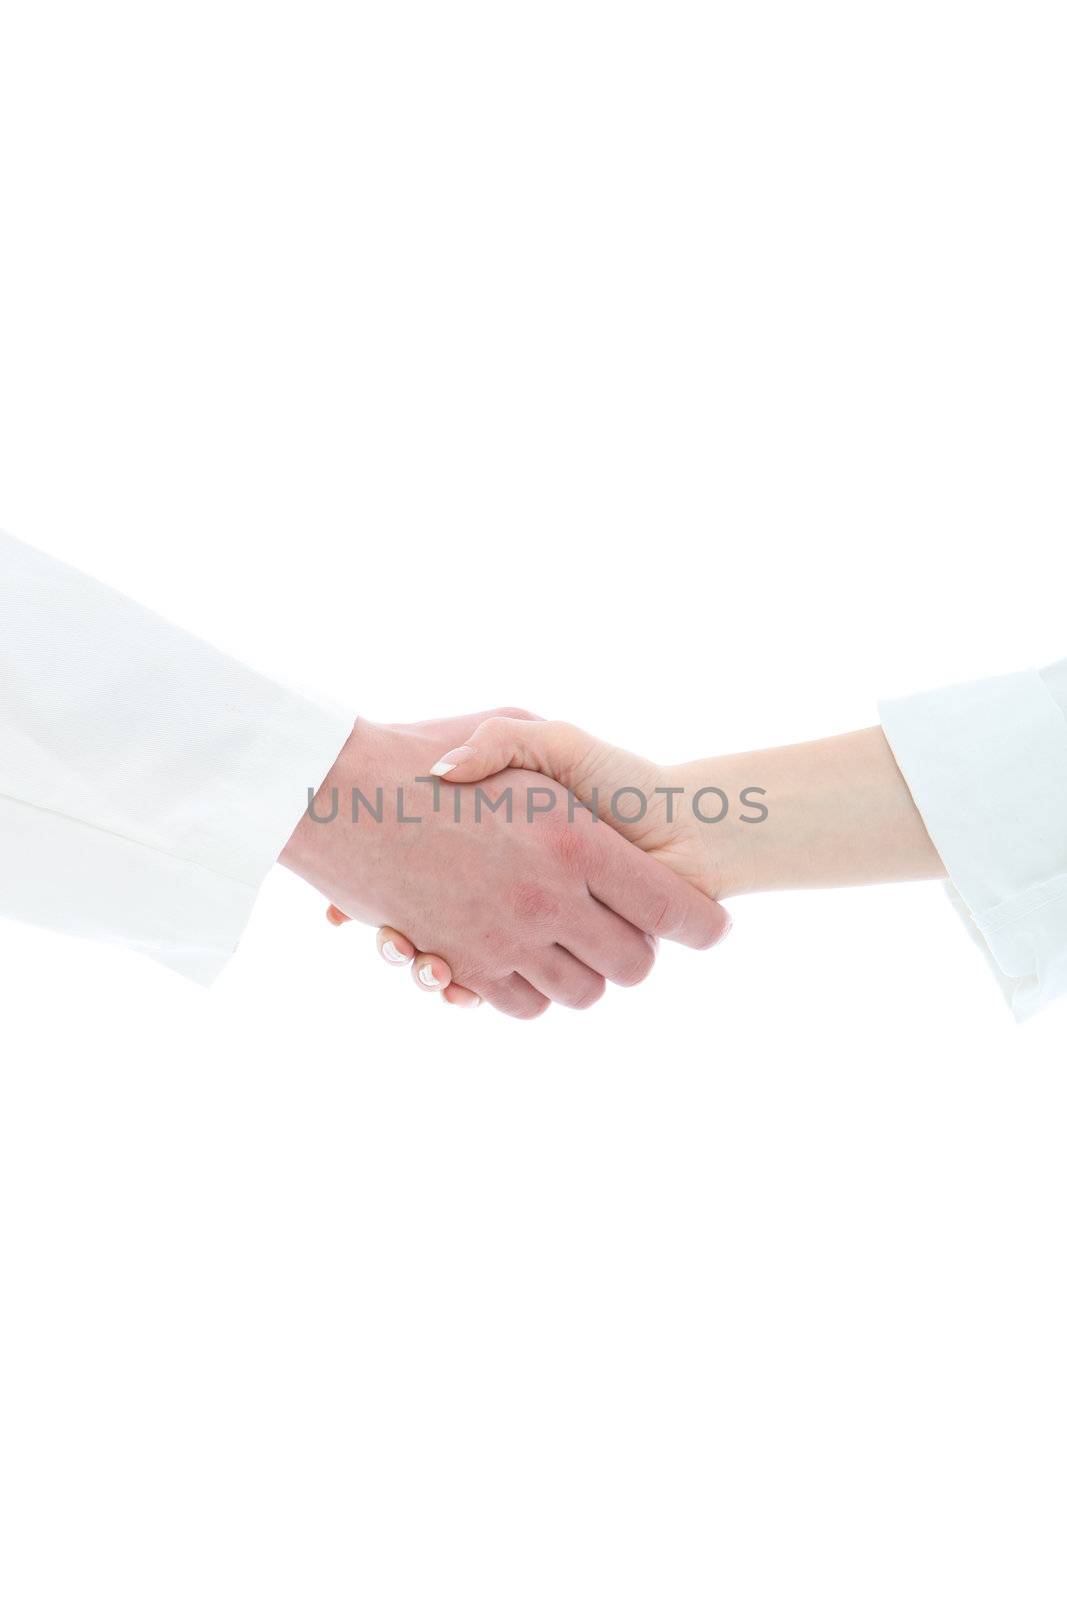 Handshake between medical staff by Farina6000